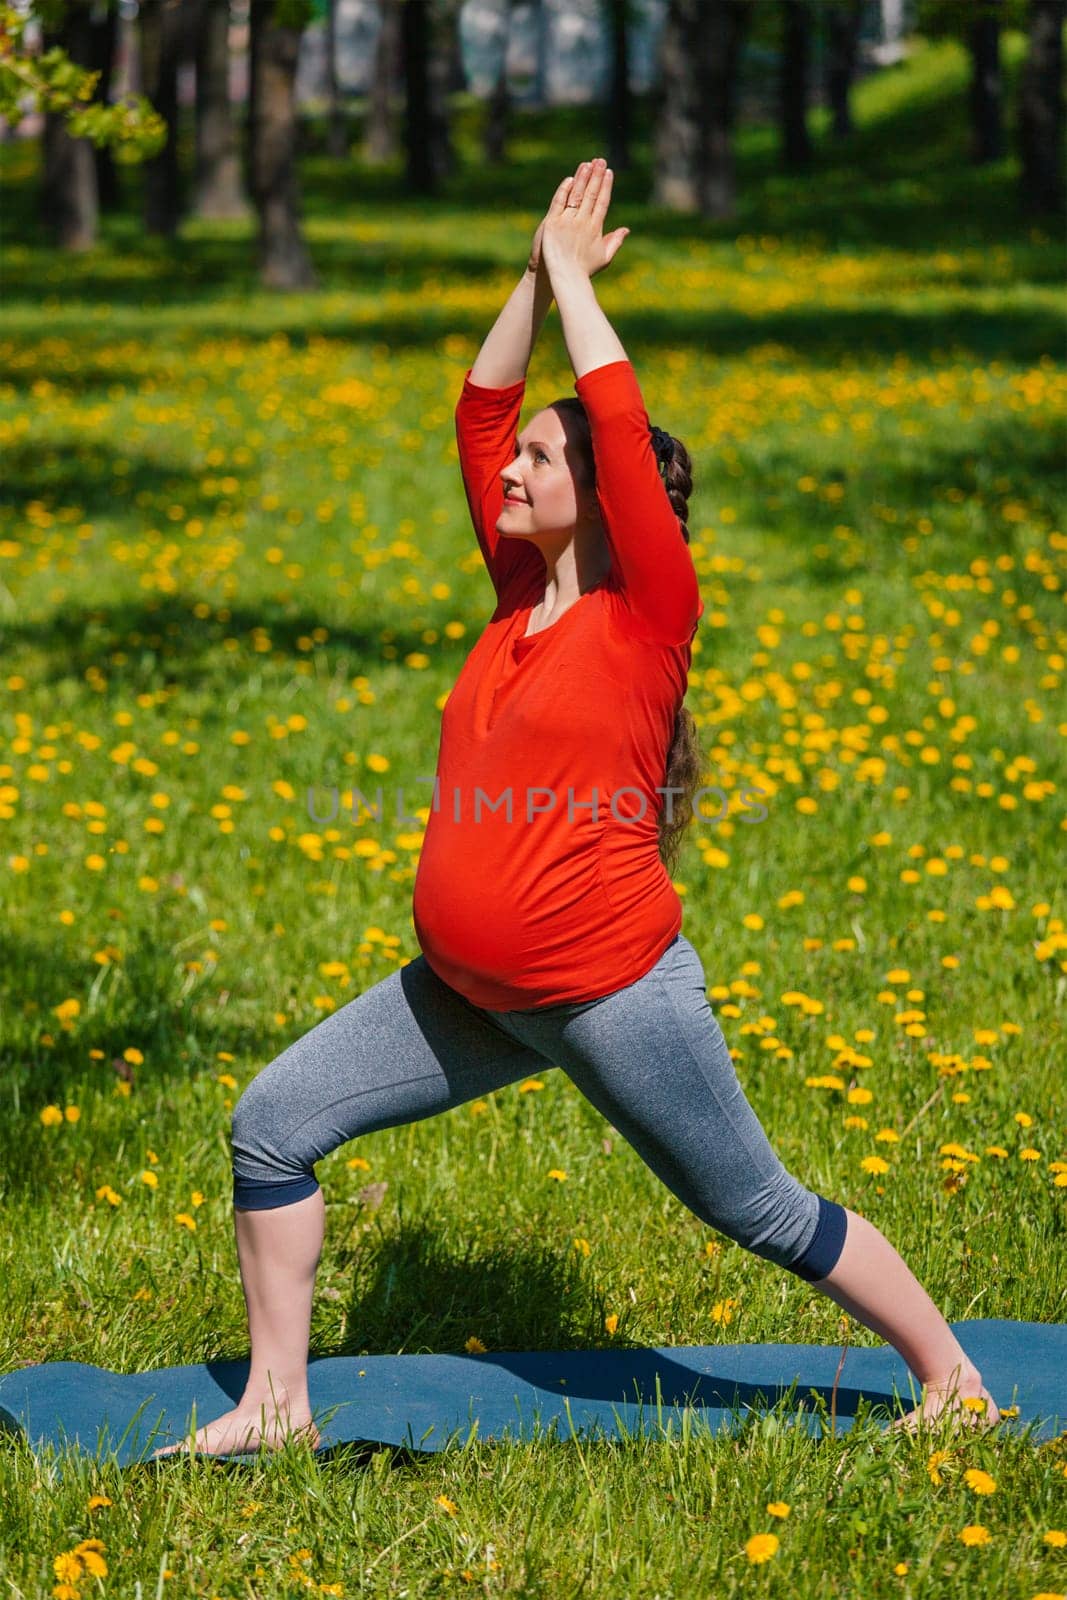 Pregnancy yoga exercise - pregnant woman doing yoga asana Virabhadrasana warrior pose outdoors on grass in summer